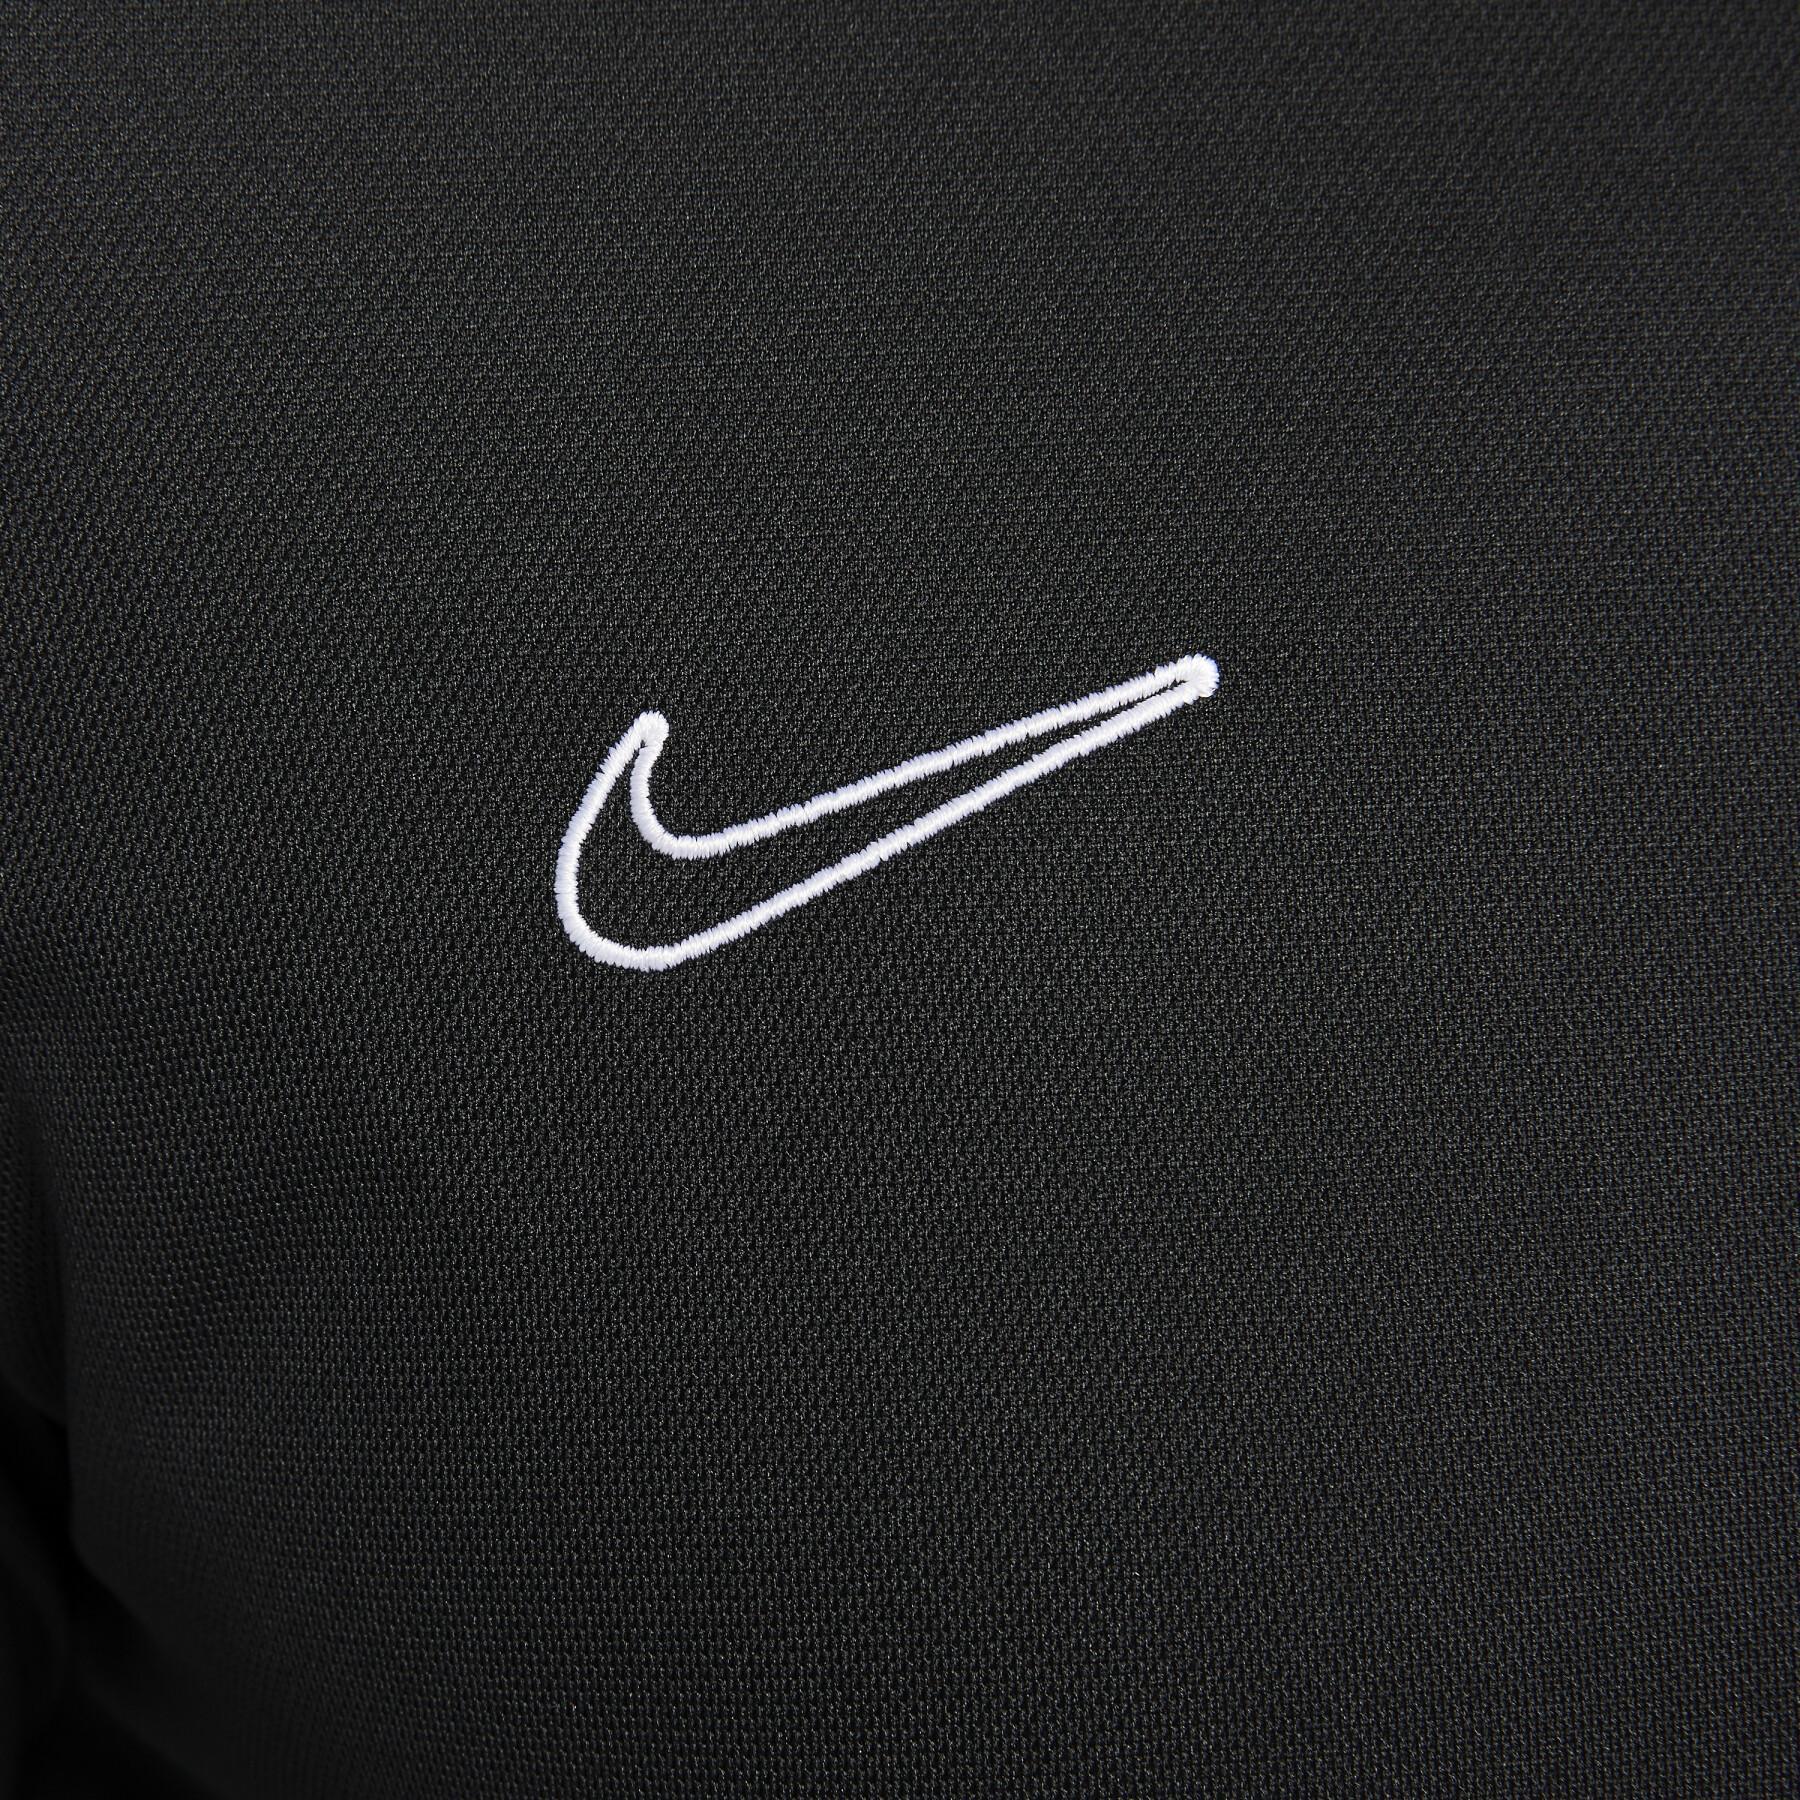 Tracksuit Nike Dri-FIT Academy 23 BR - Sweat suit set - Packs - Club